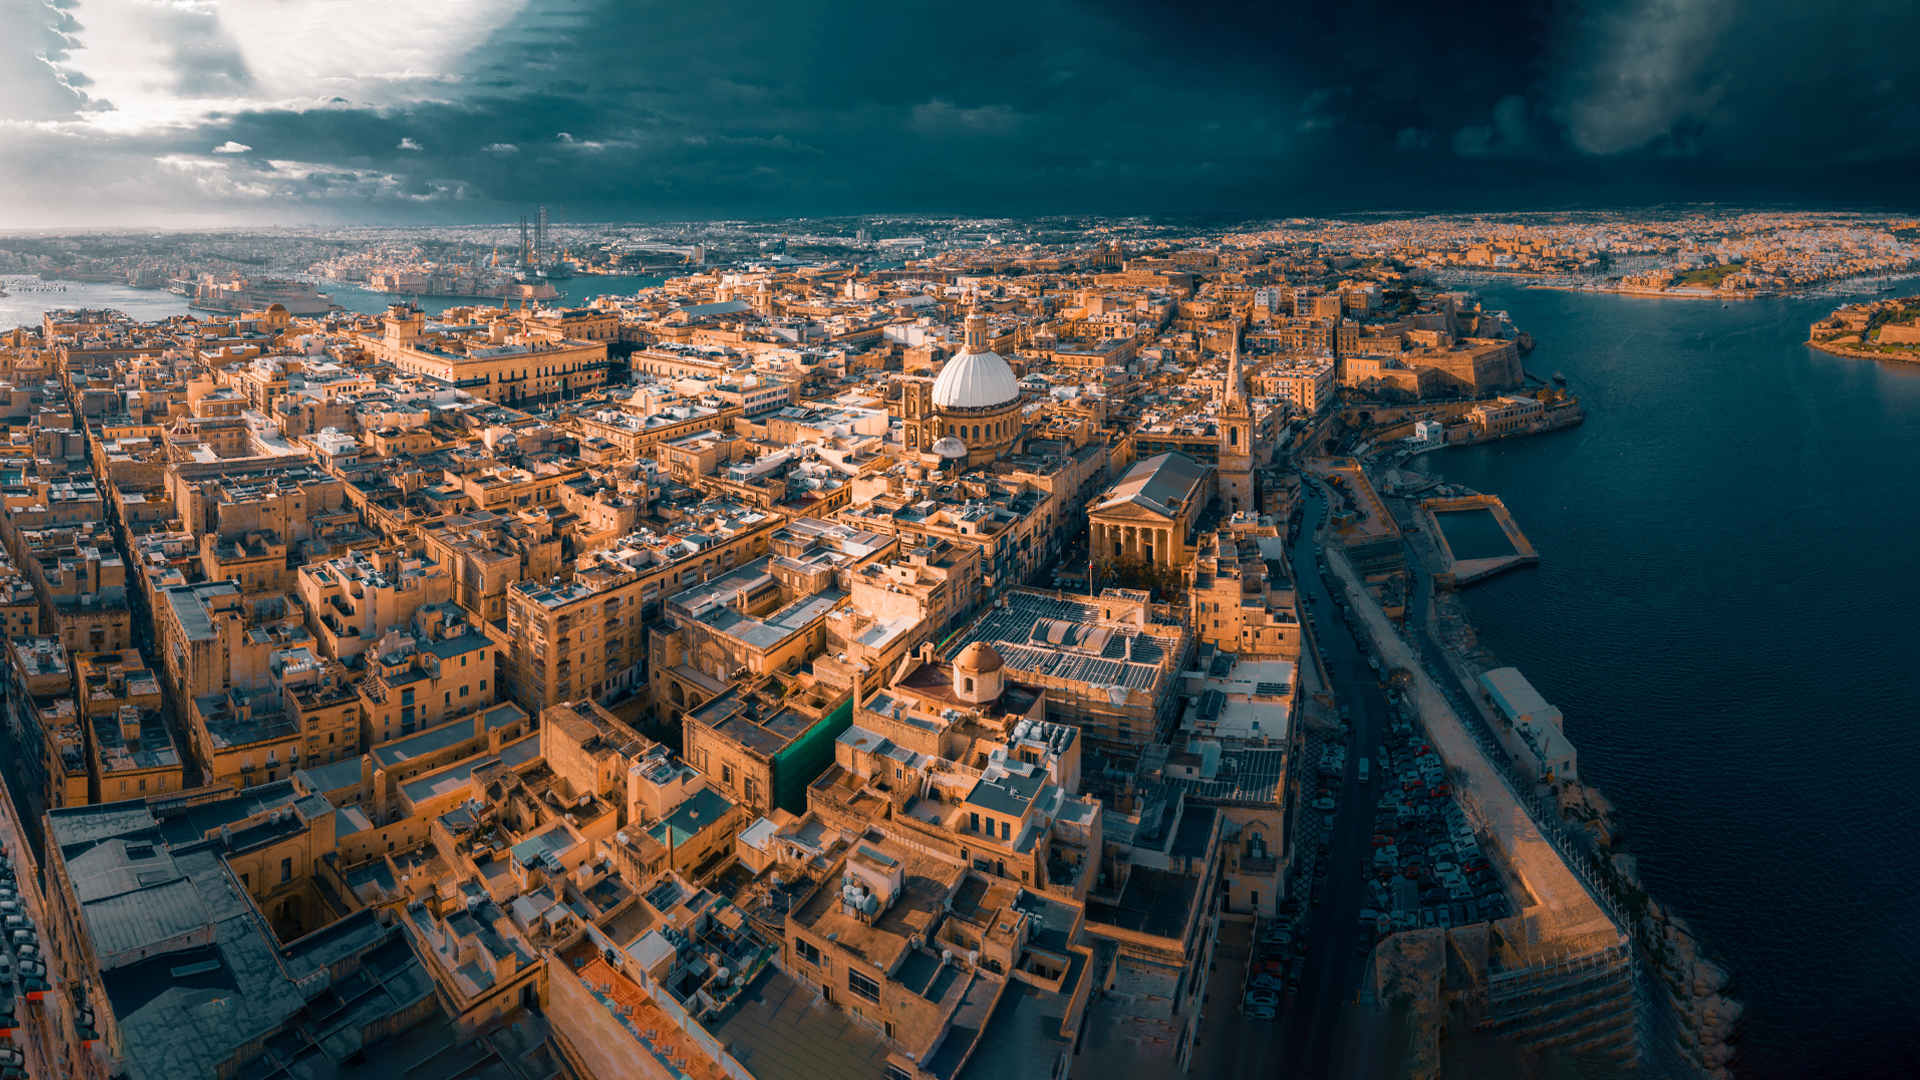 City of Valletta Capital of Malta Image for Hero Box